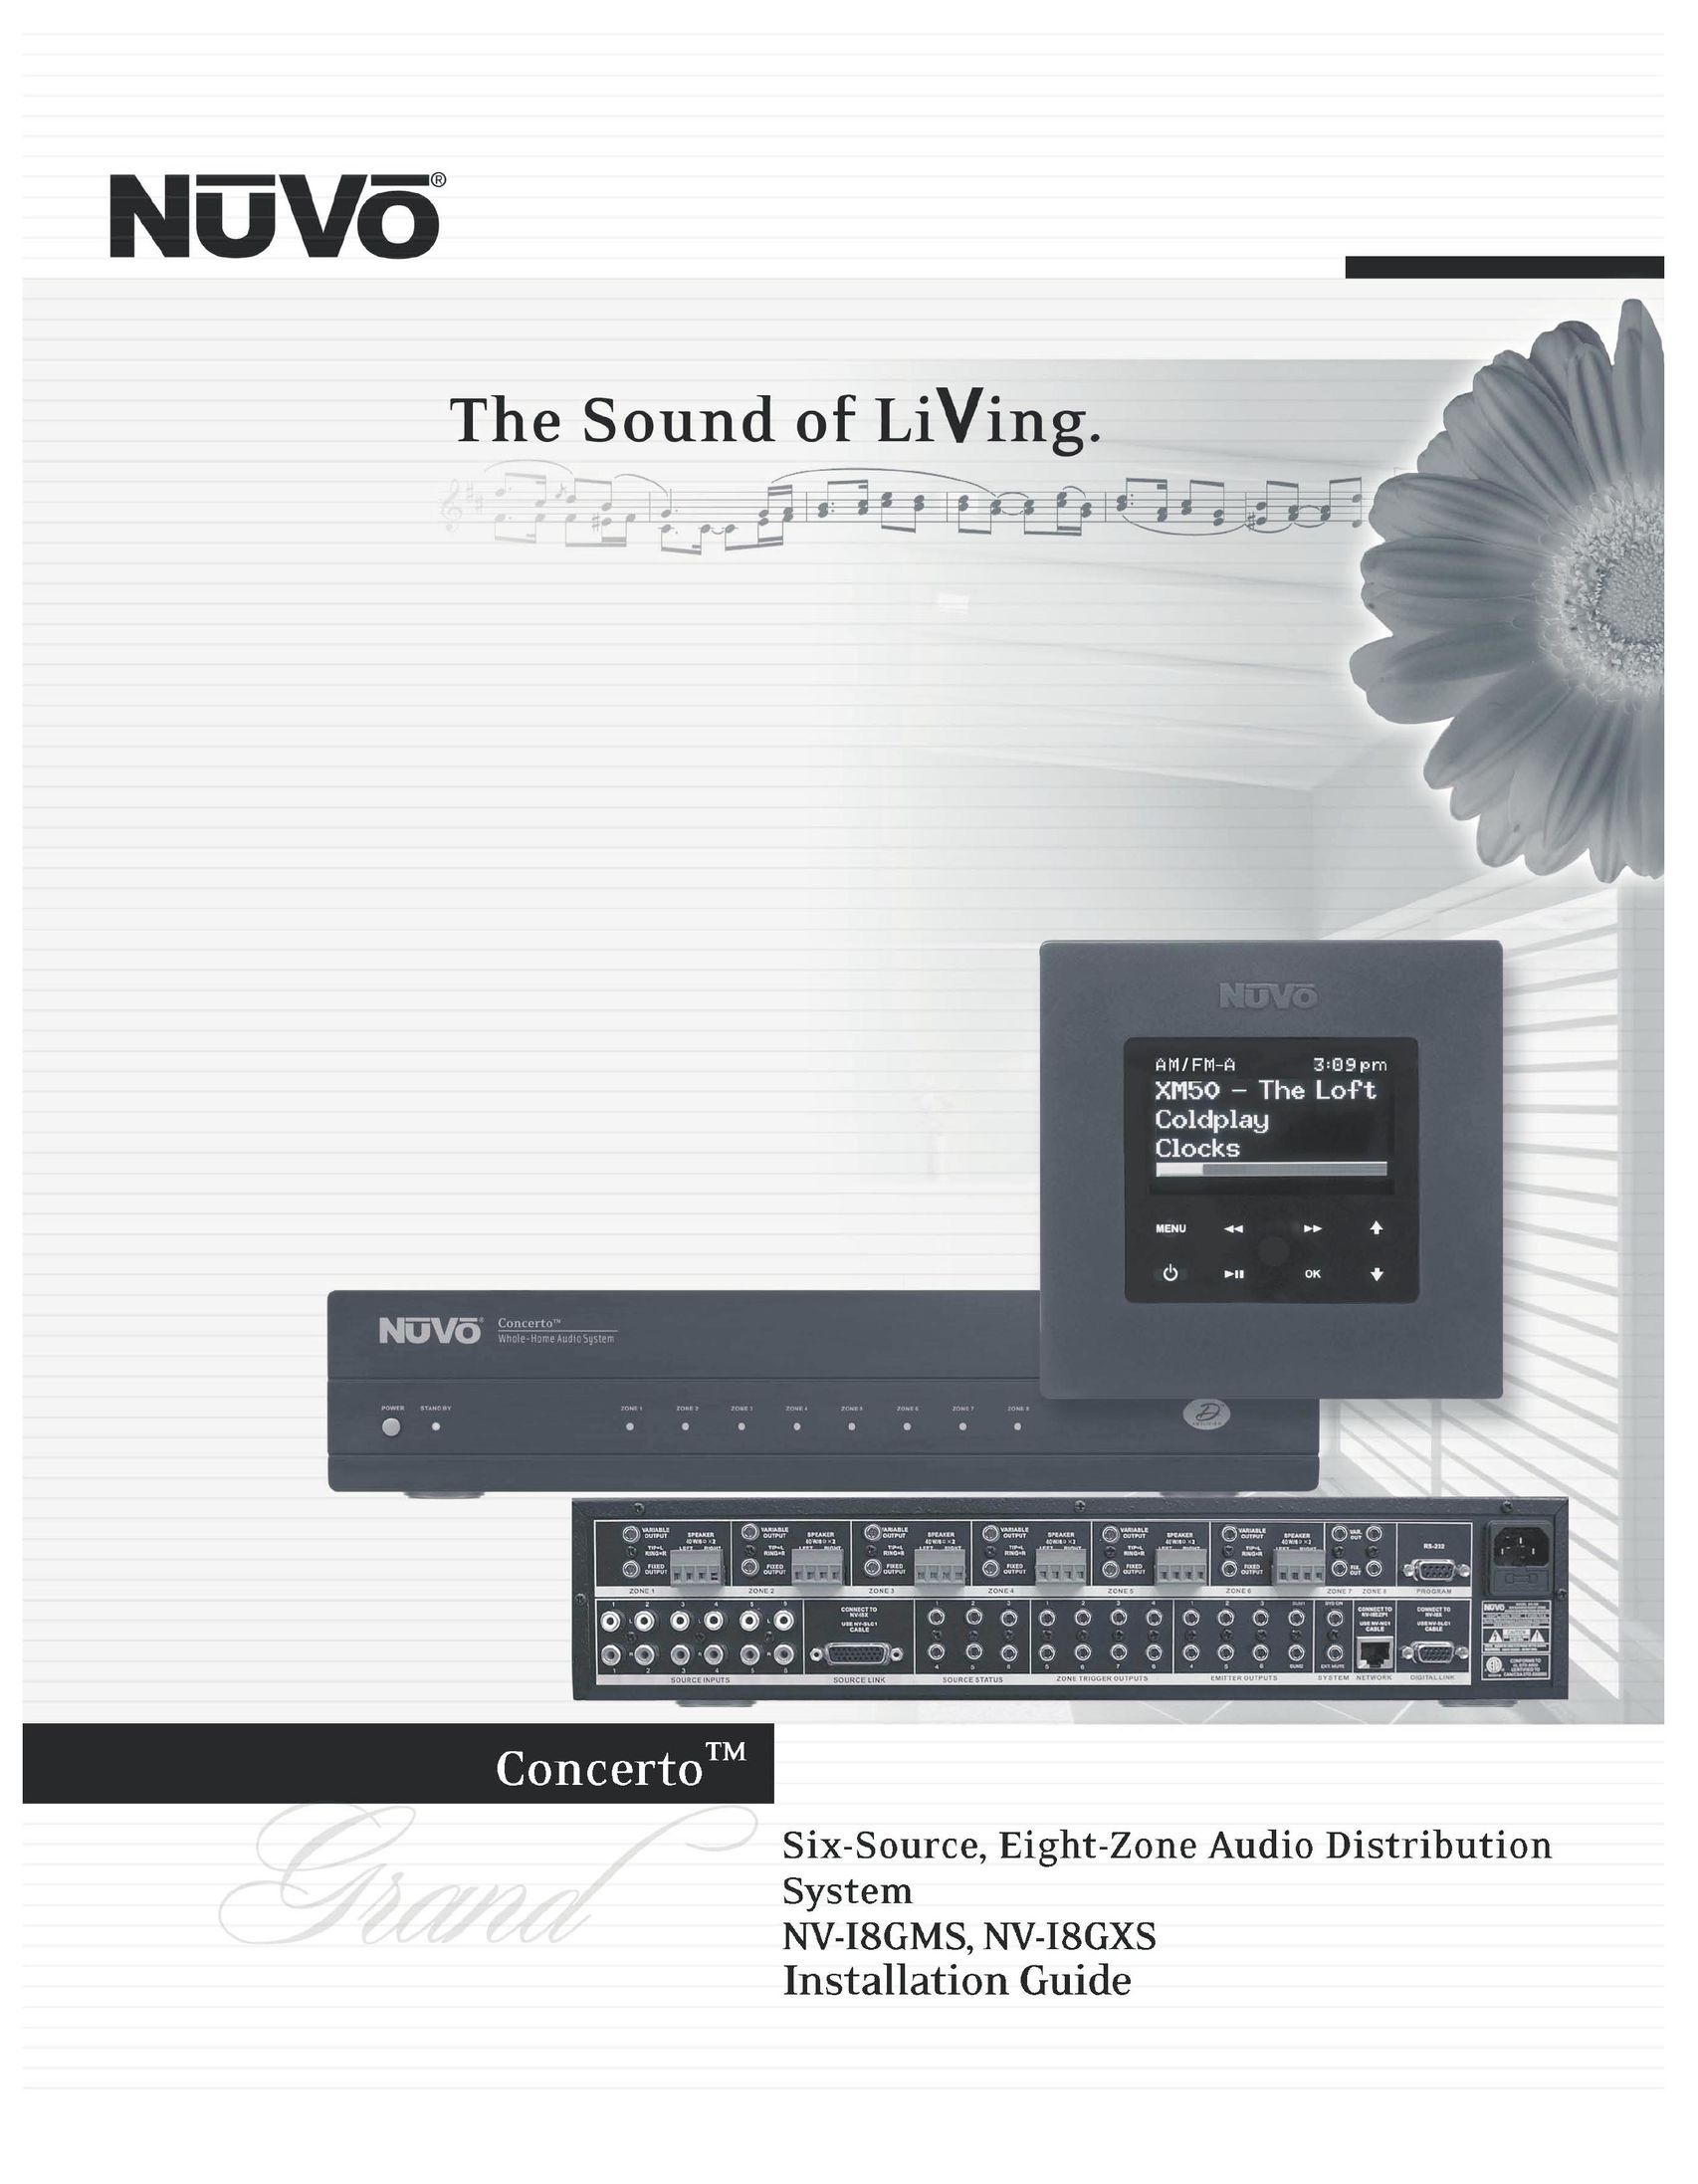 Nuvo NV-I8GXS Stereo System User Manual